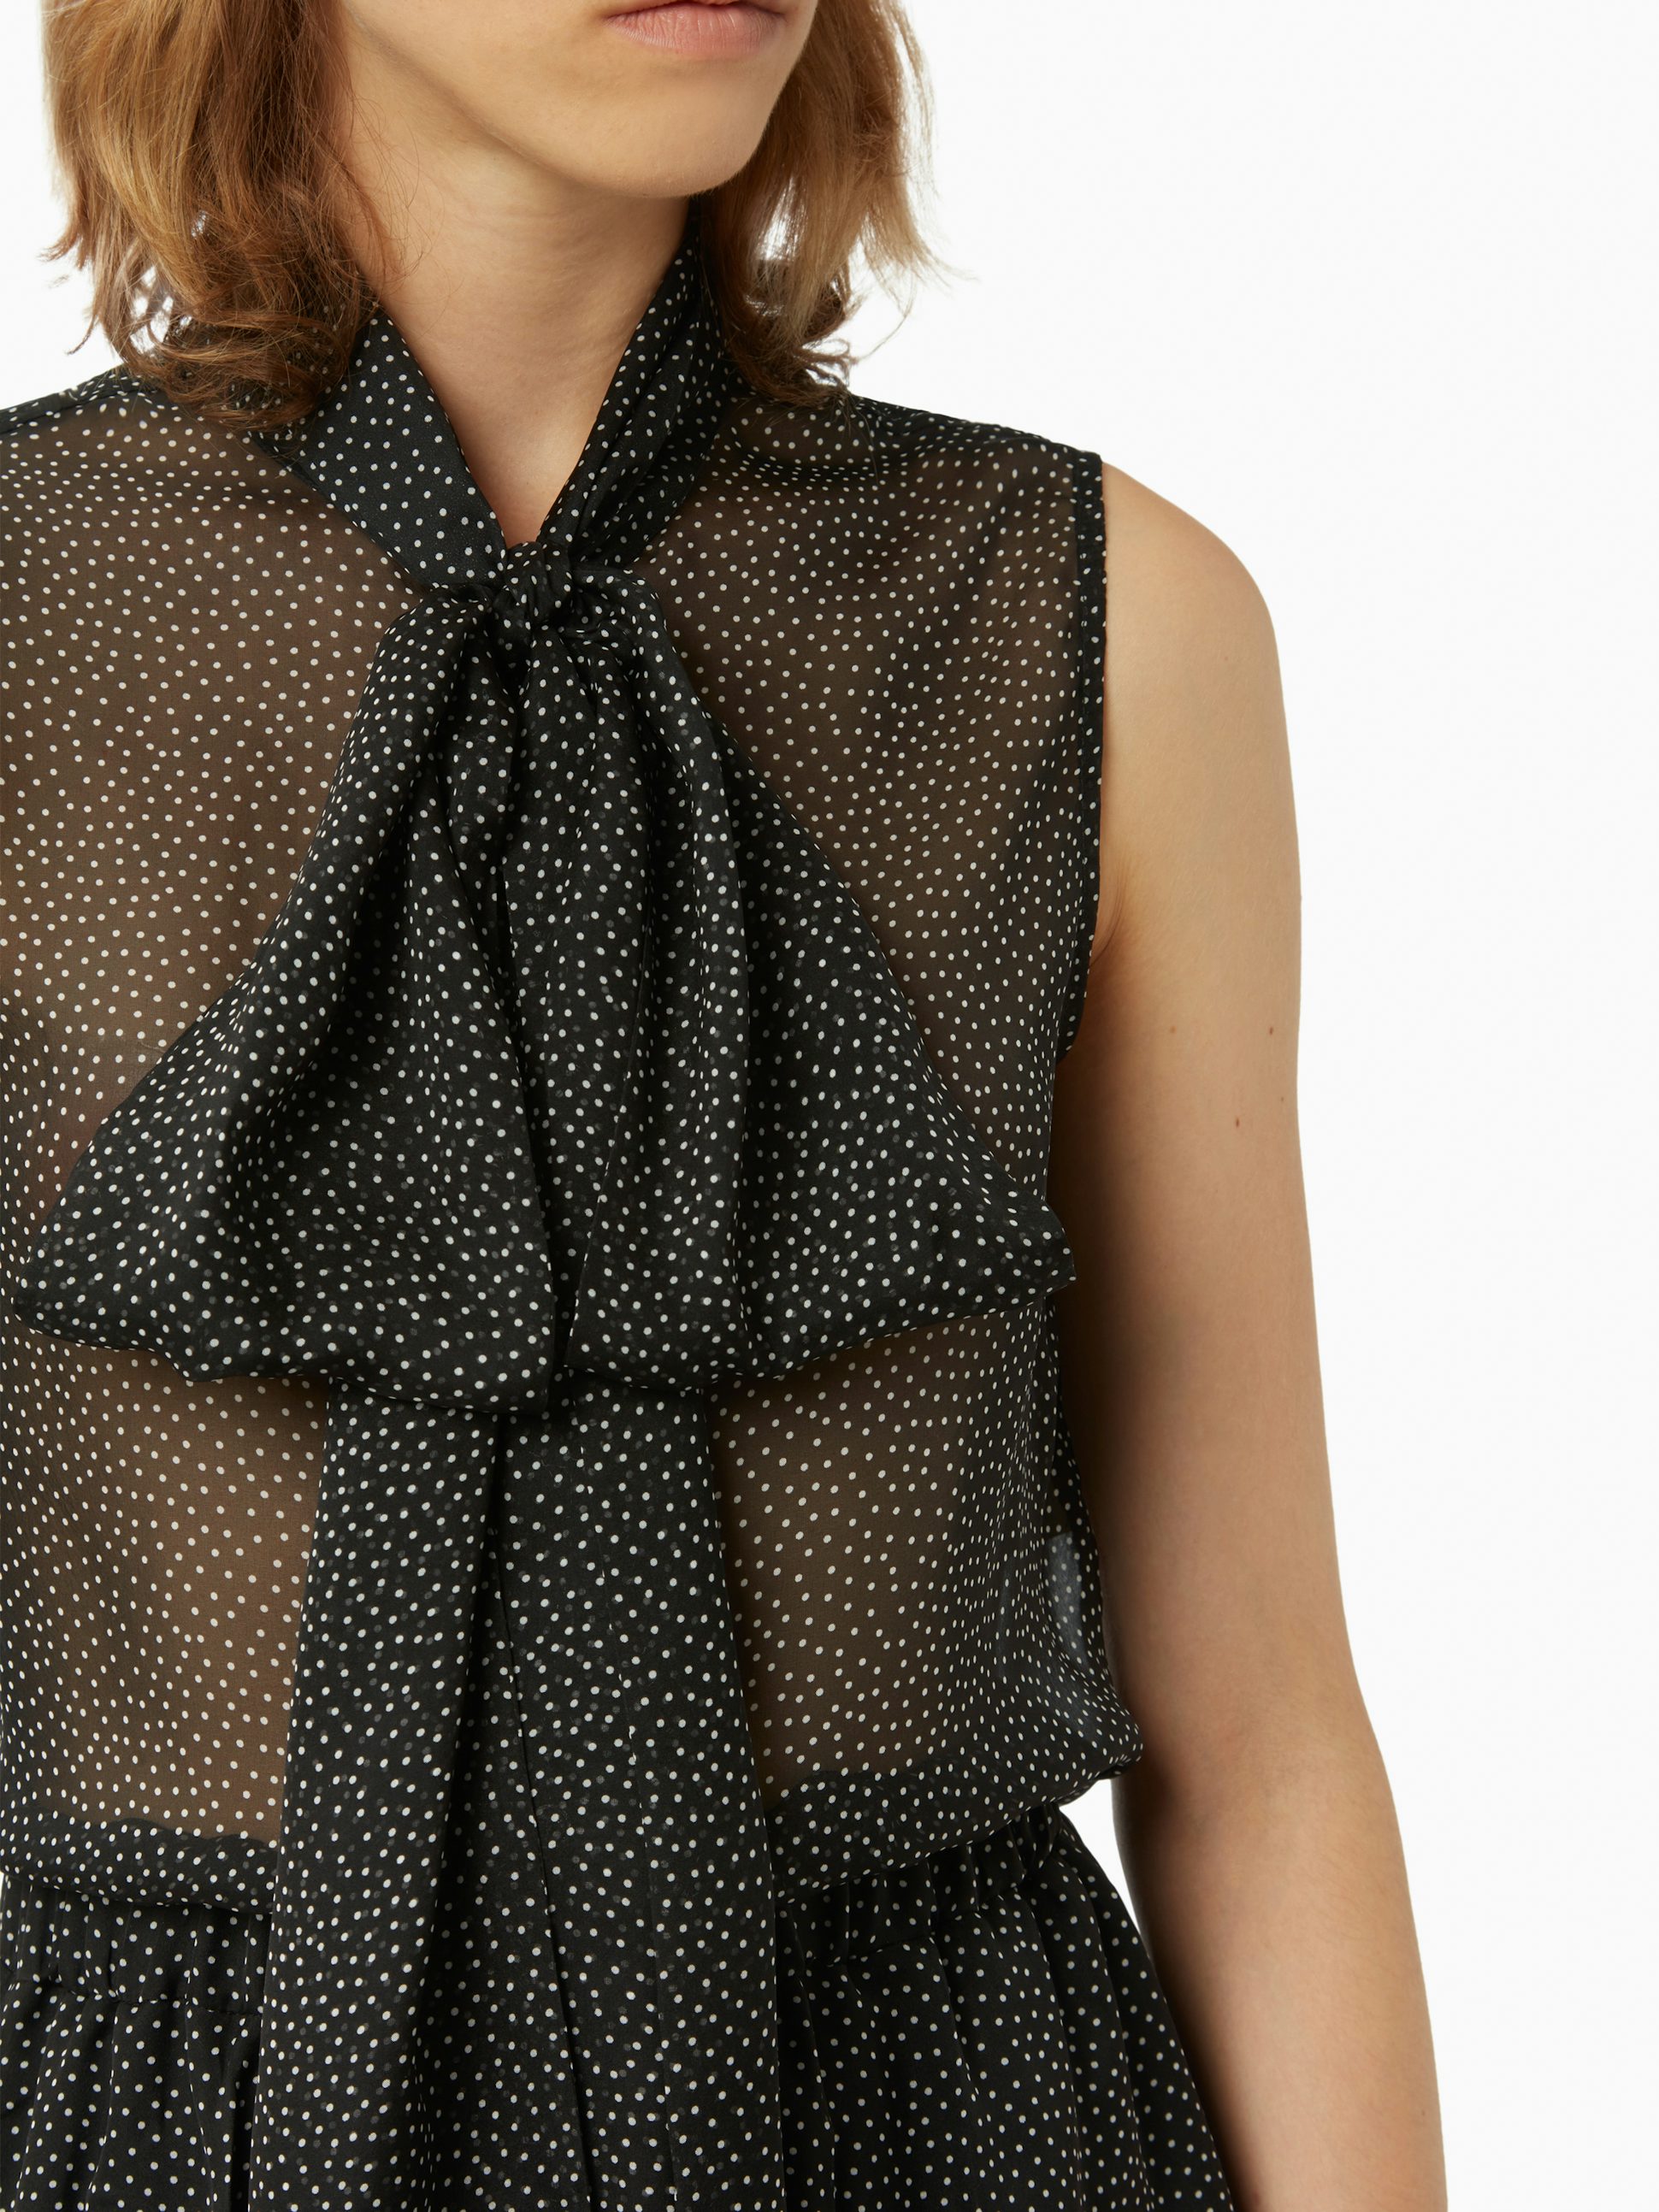 Sleeveless polka-dot shirt in black - Nina Ricci